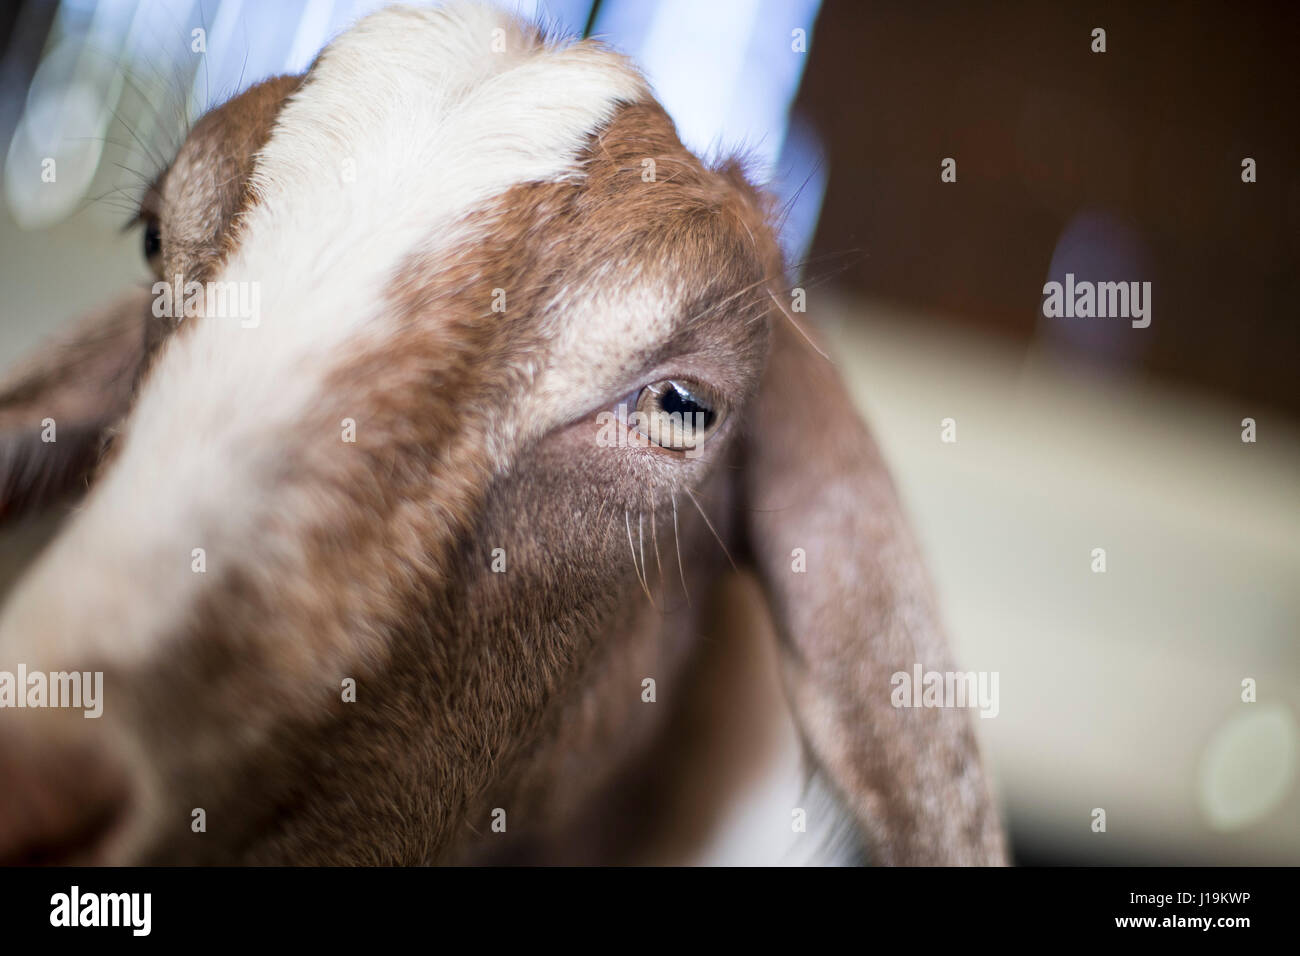 Close up photographs of goats. Stock Photo